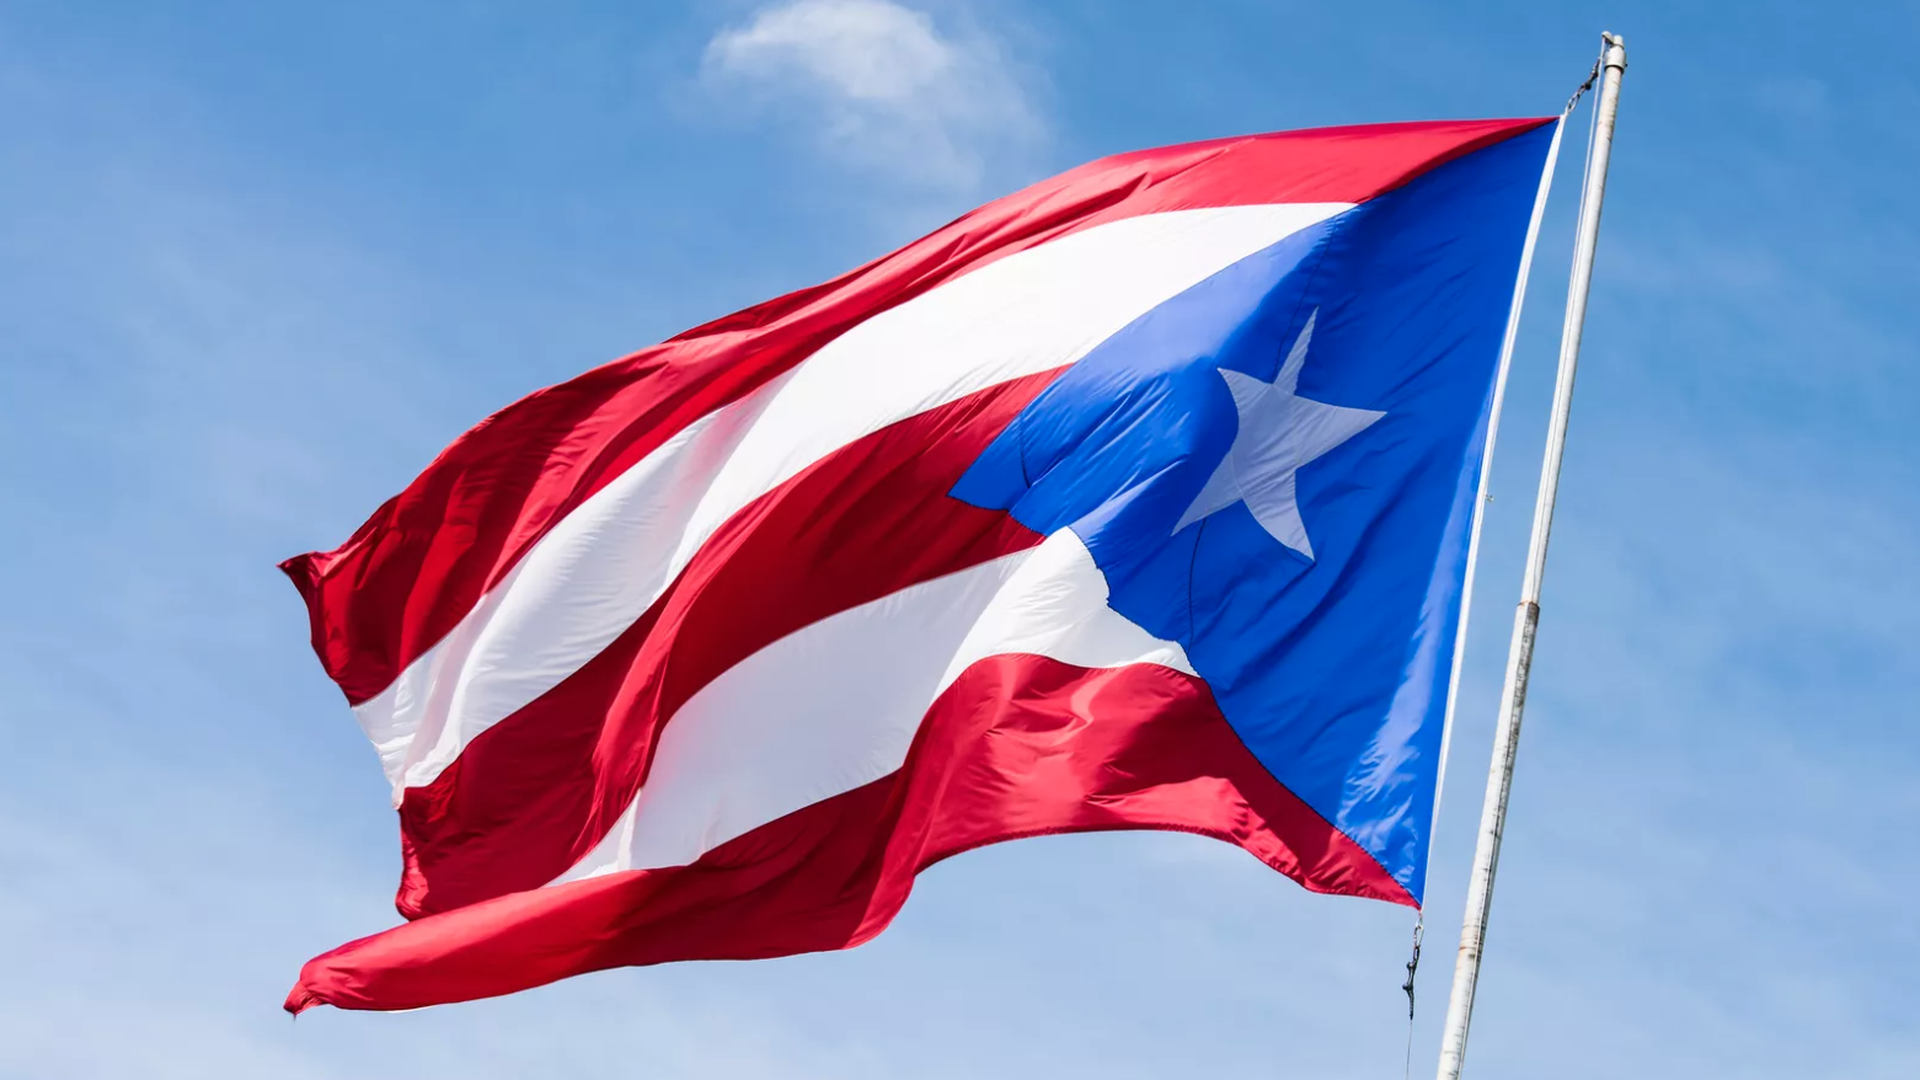 The Puerto Rico flag.